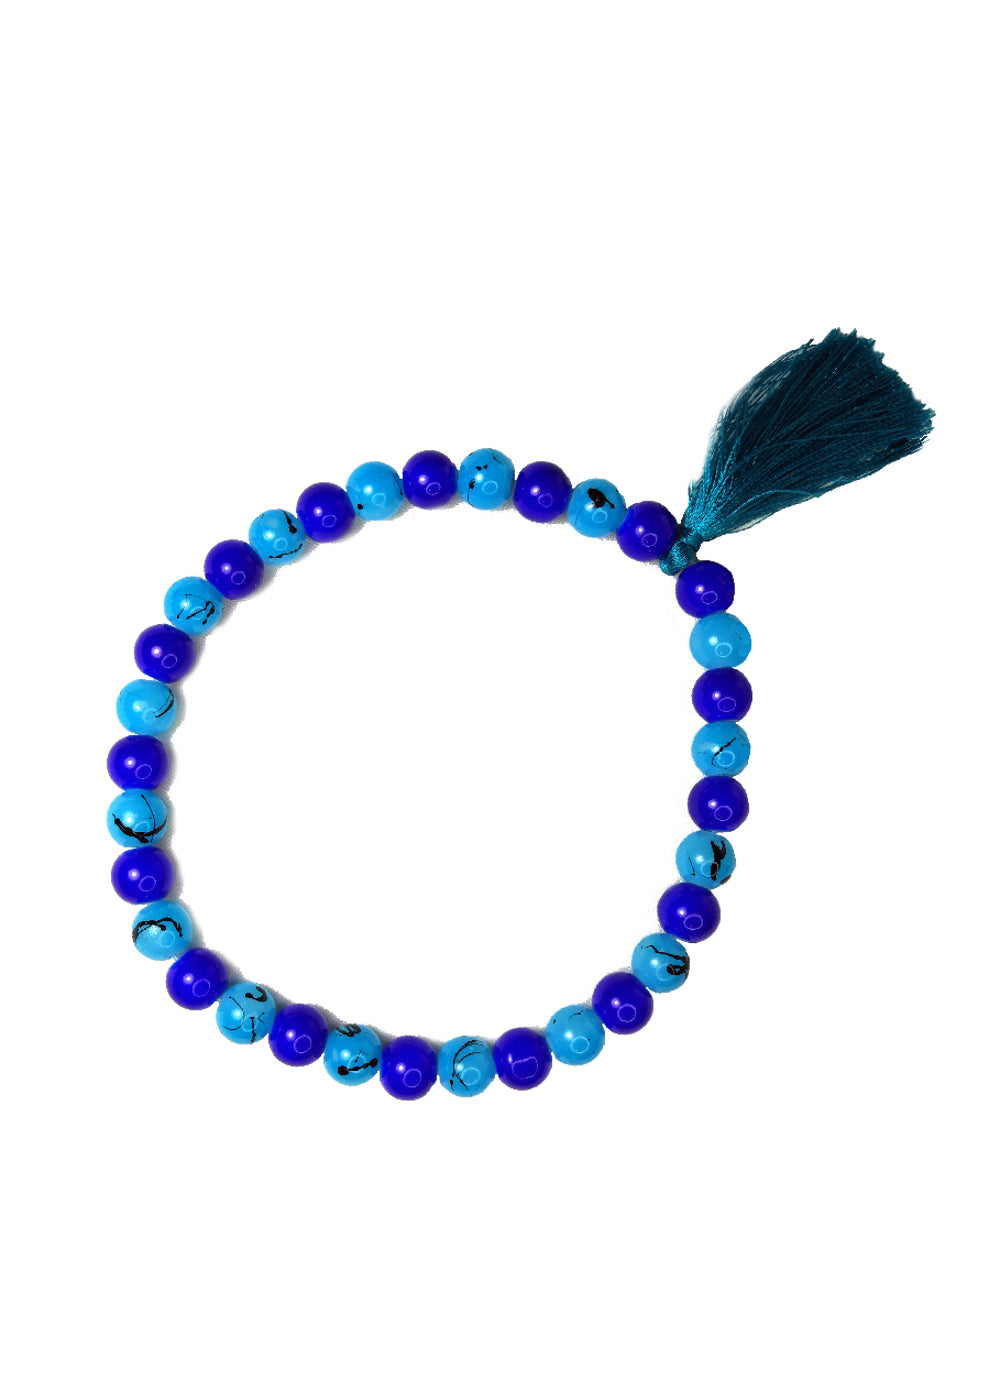 Prayer Beads - Shades of Blue